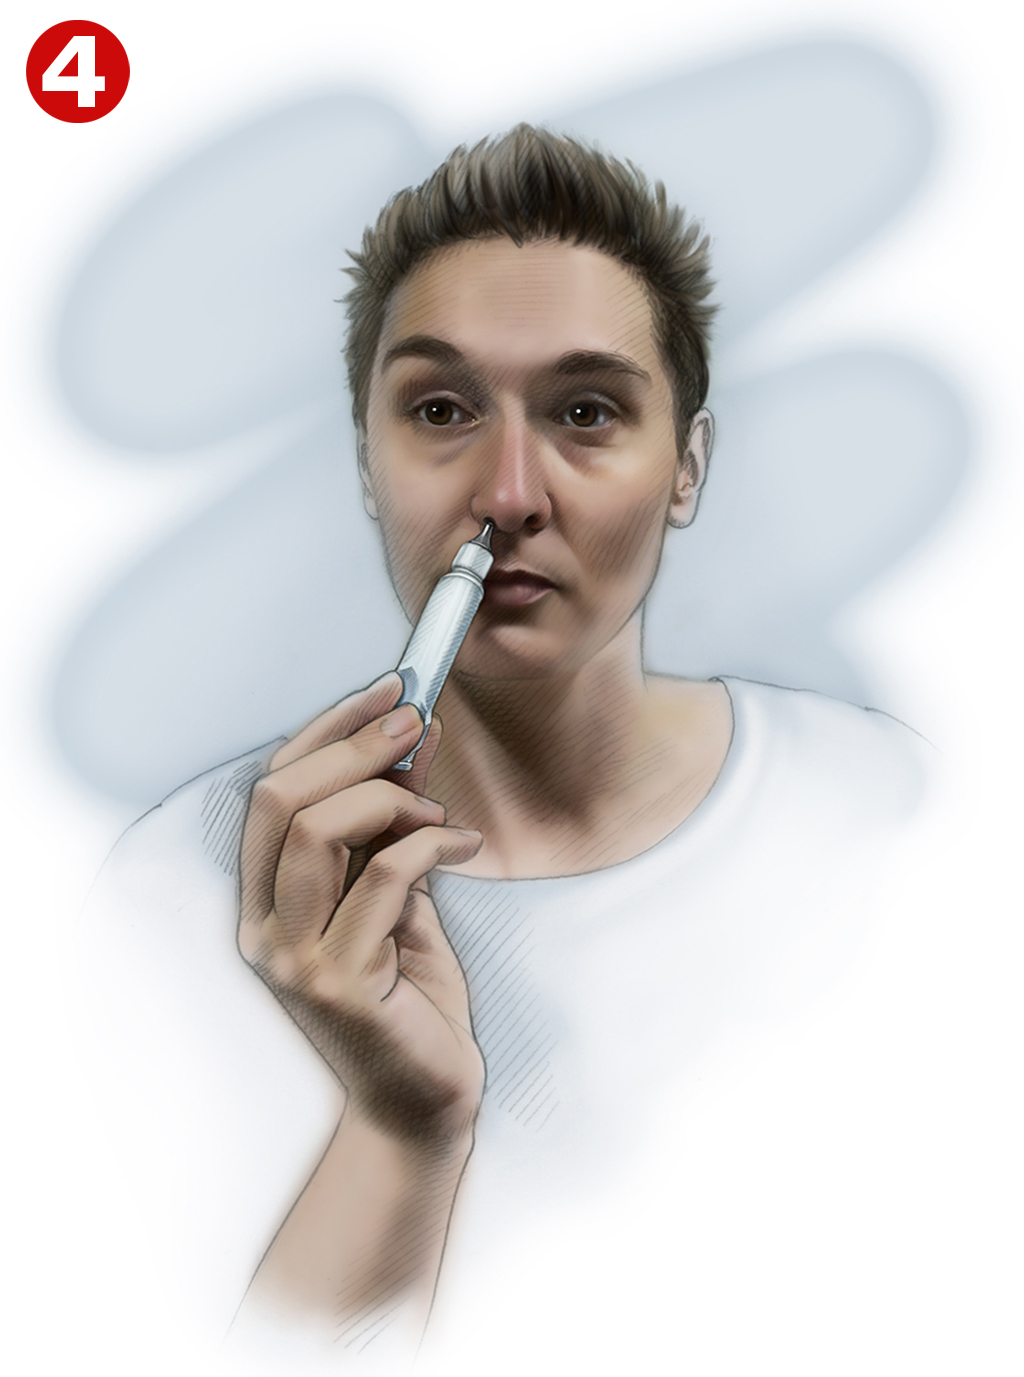 Image 4: Applying nasal ointment using single-use tube